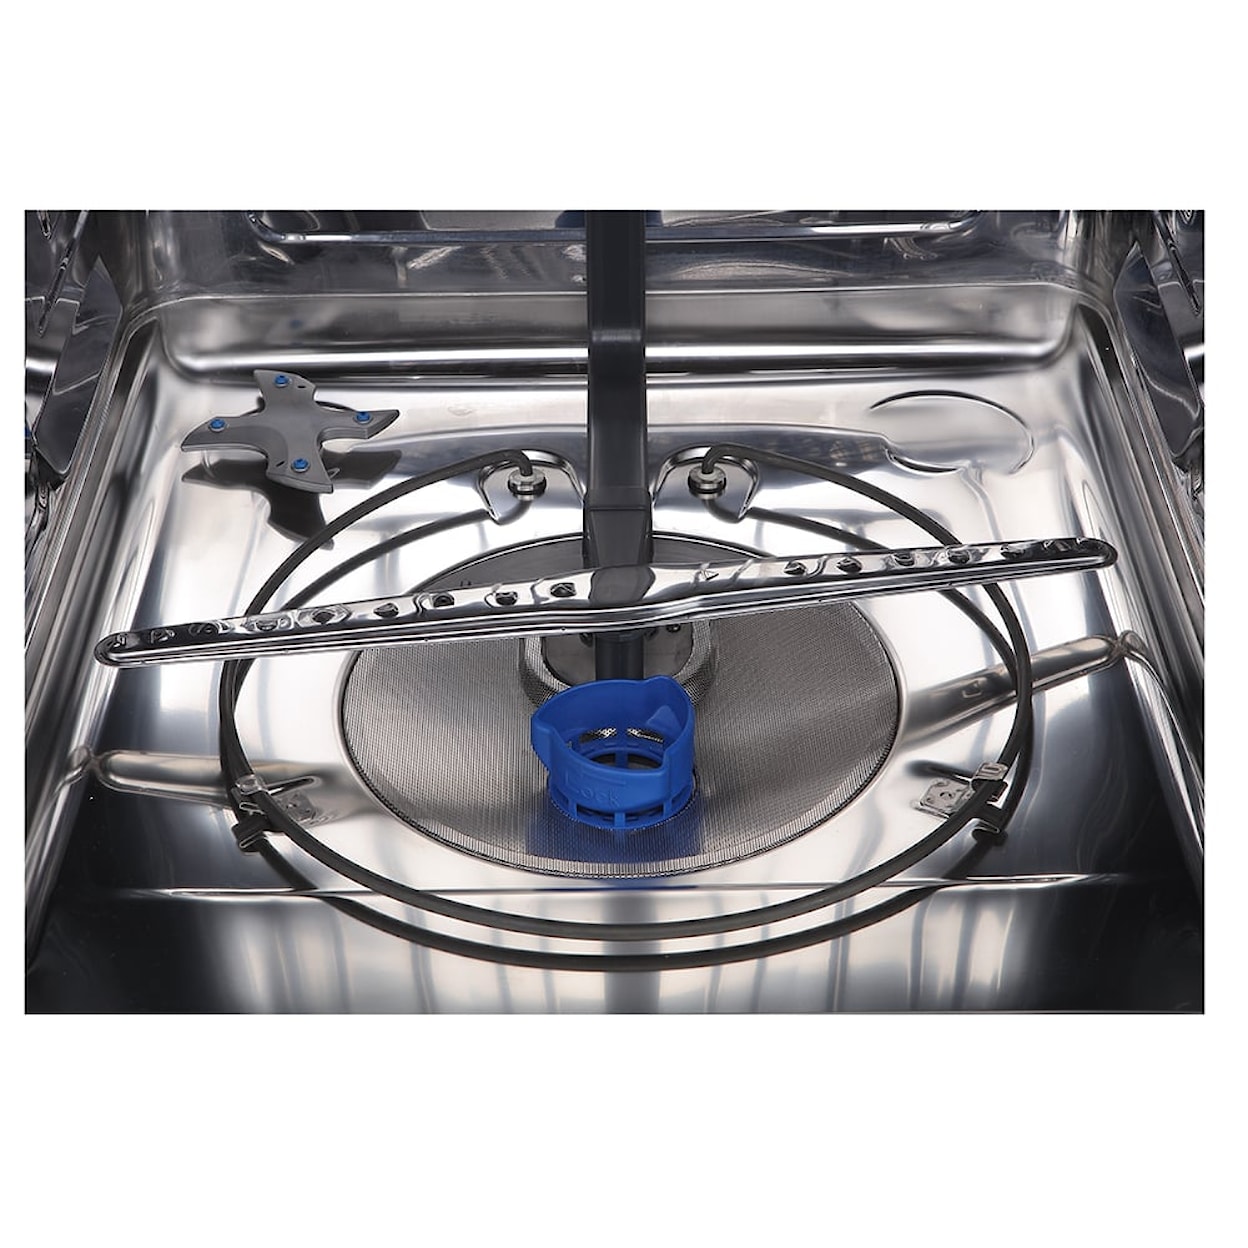 GE Appliances Dishwashers Dihwaher